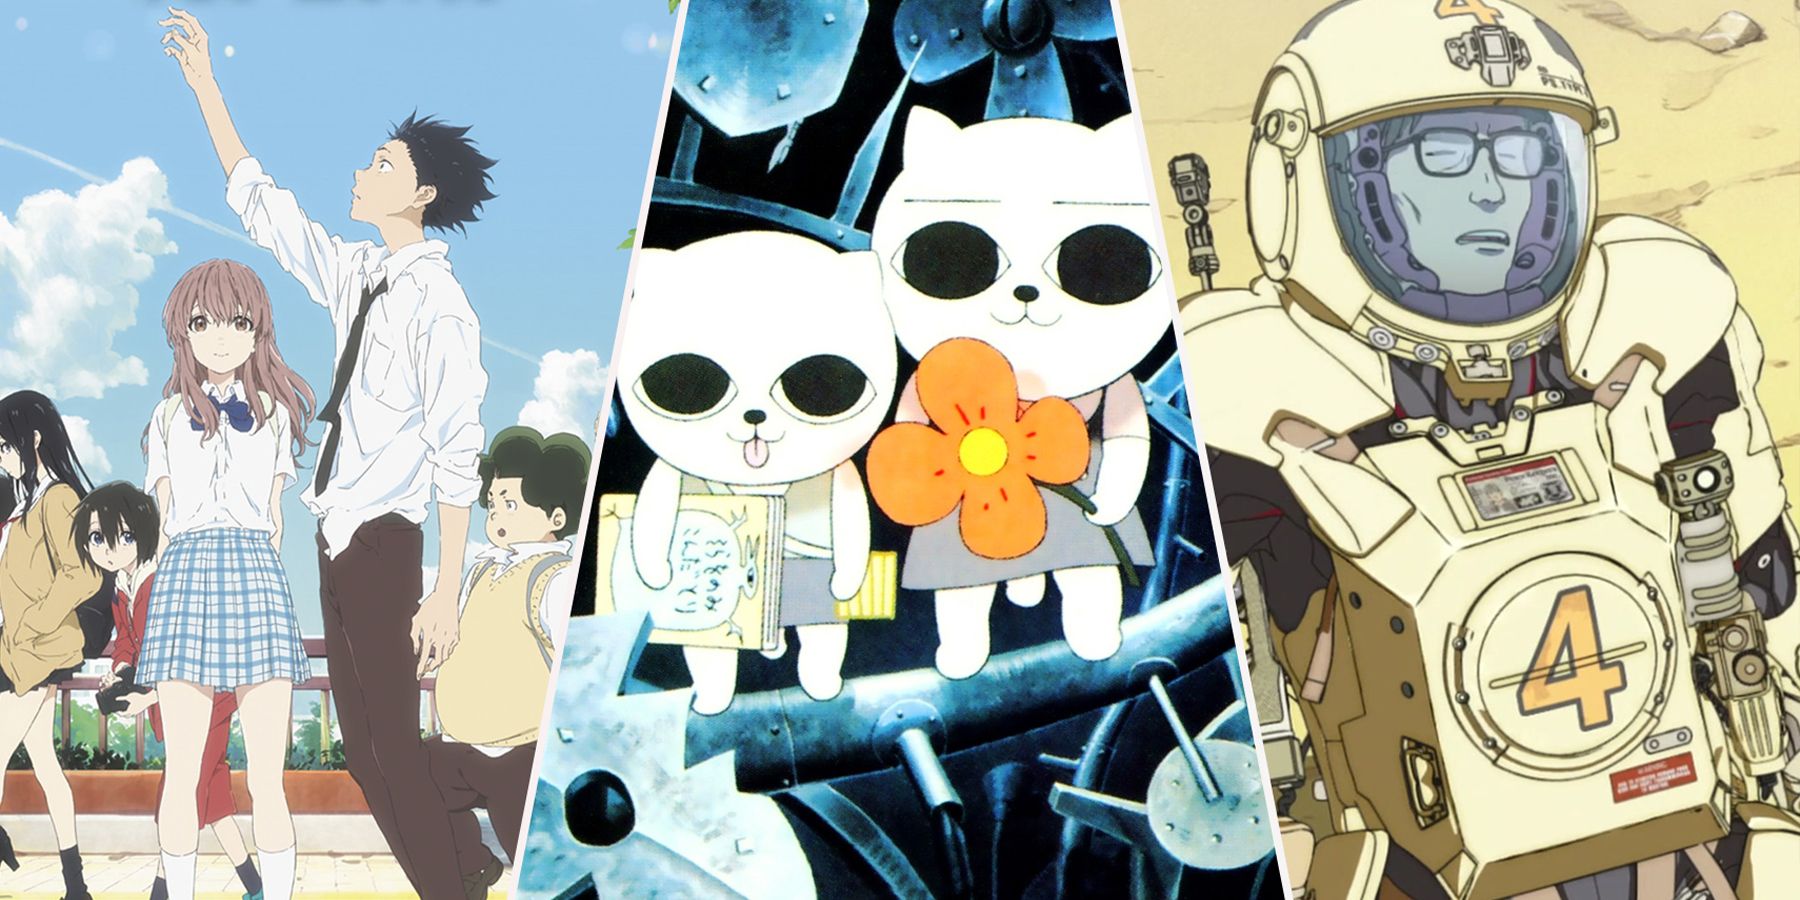 sup kucing film anime terbaik, kedamaian singkat, suara sunyi